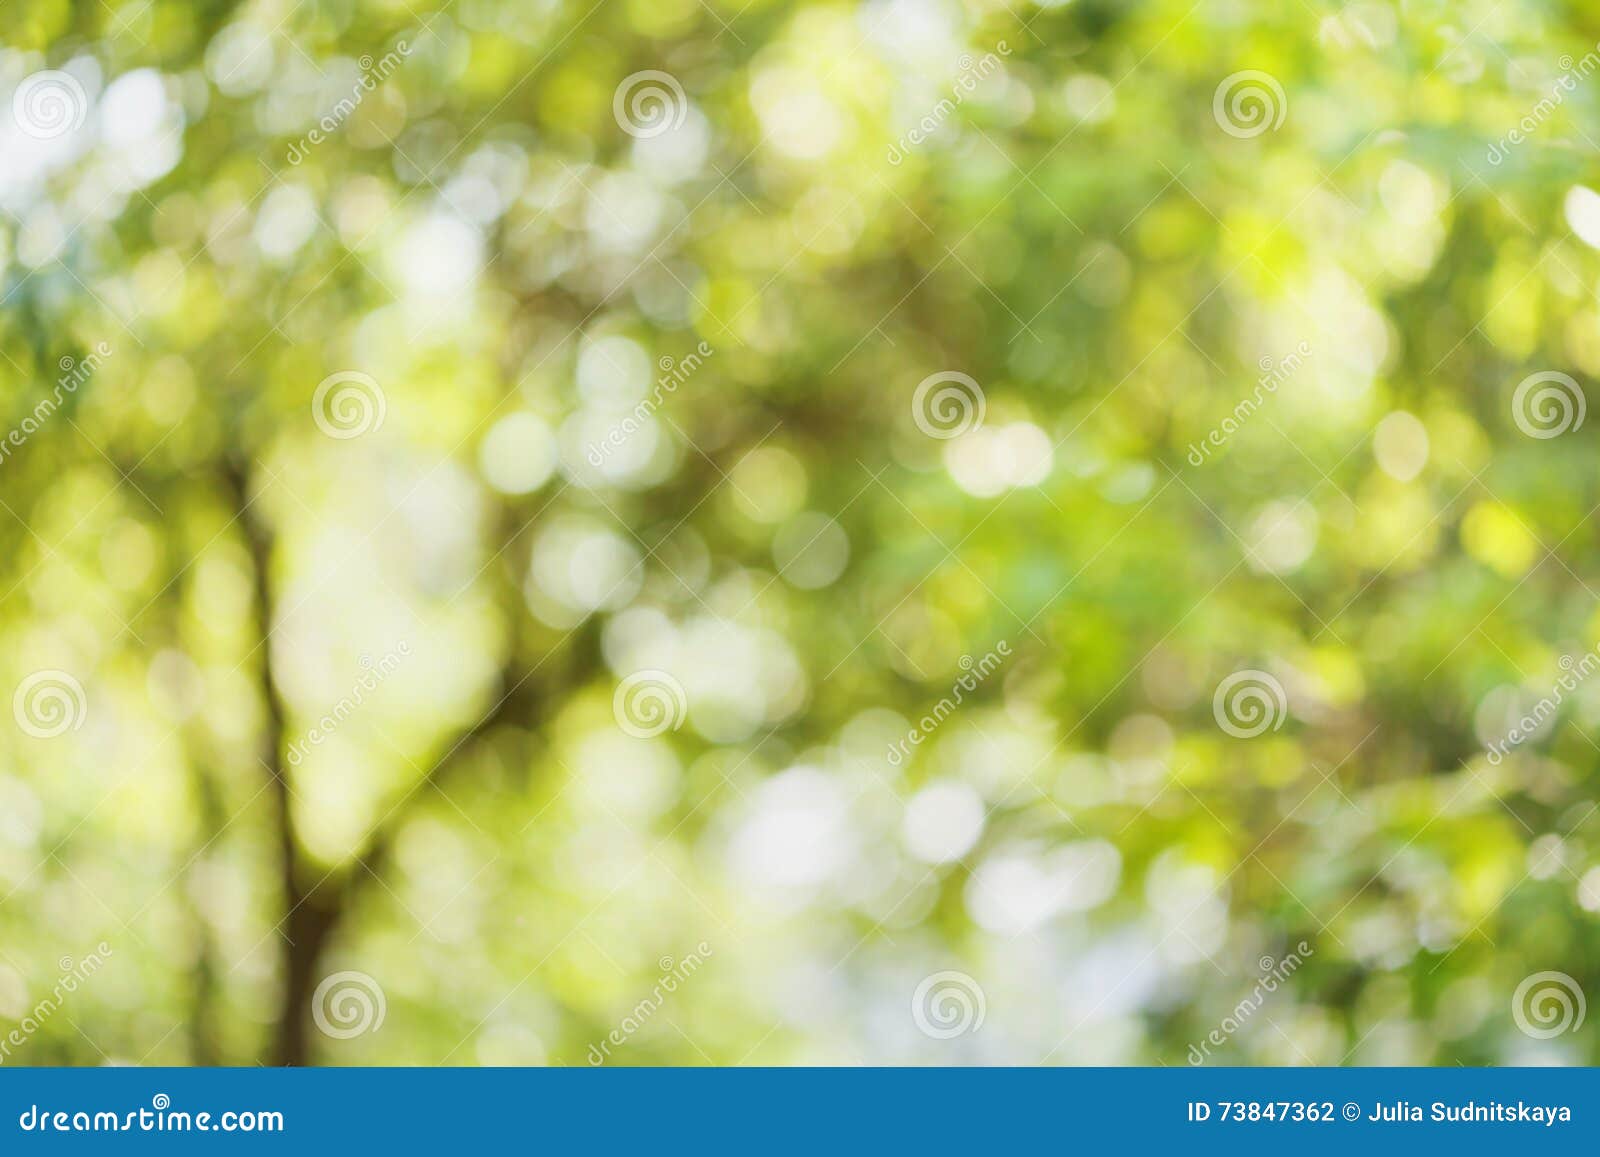 beautiful bokeh background of defocused tree. natural blurred backdrop of green leaves. summer or spring season.